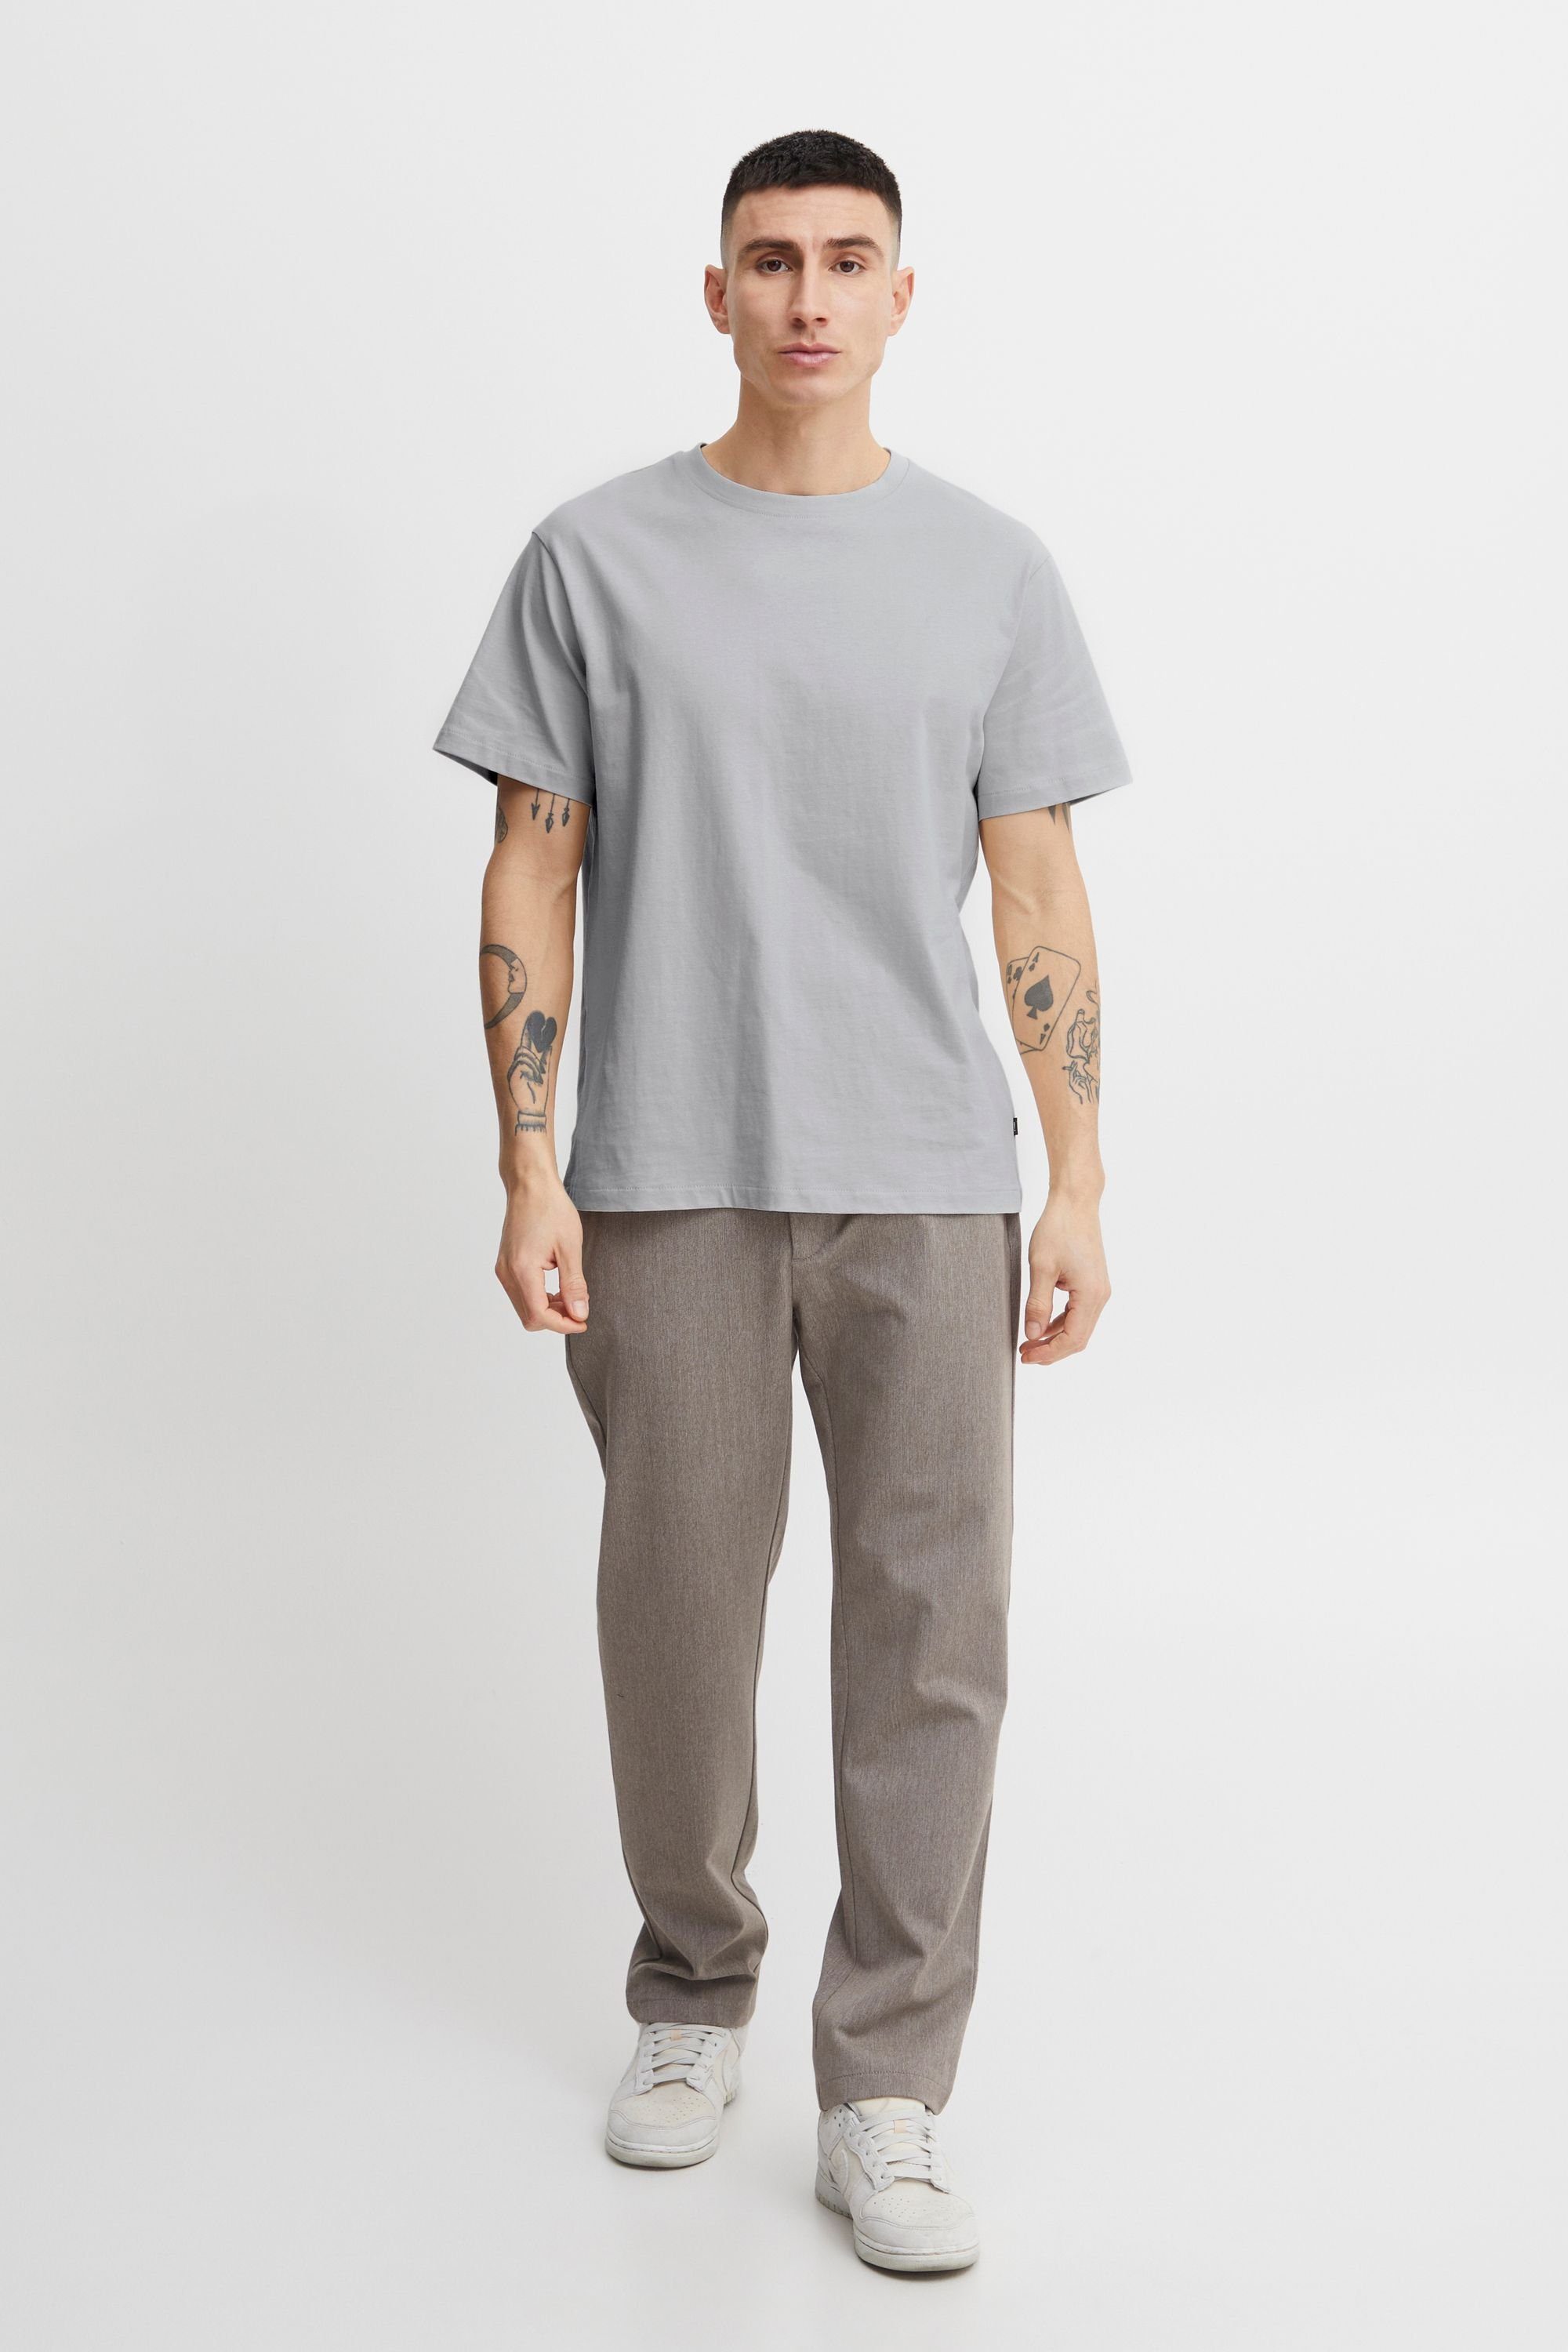 SS !Solid T-Shirt (1541011) Grey SDCadel 21107195 Melange Light